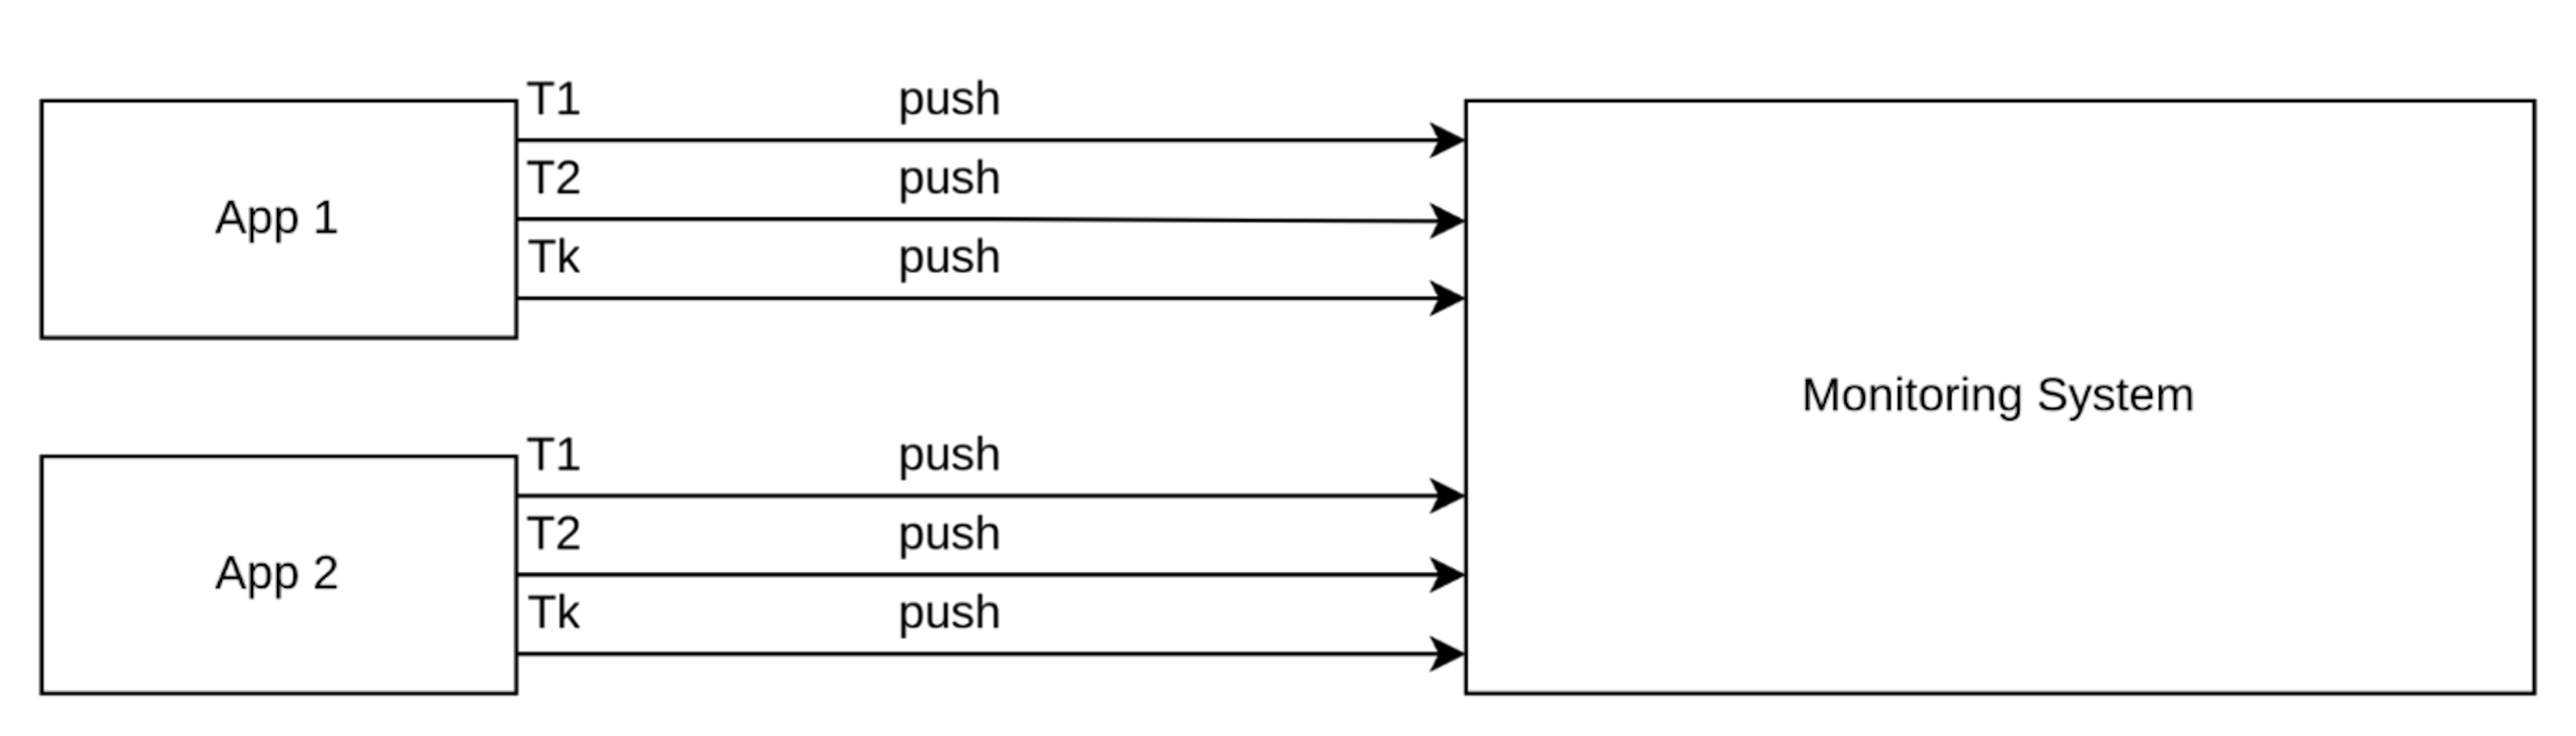 Pic 3. Push acquisition method illustration.